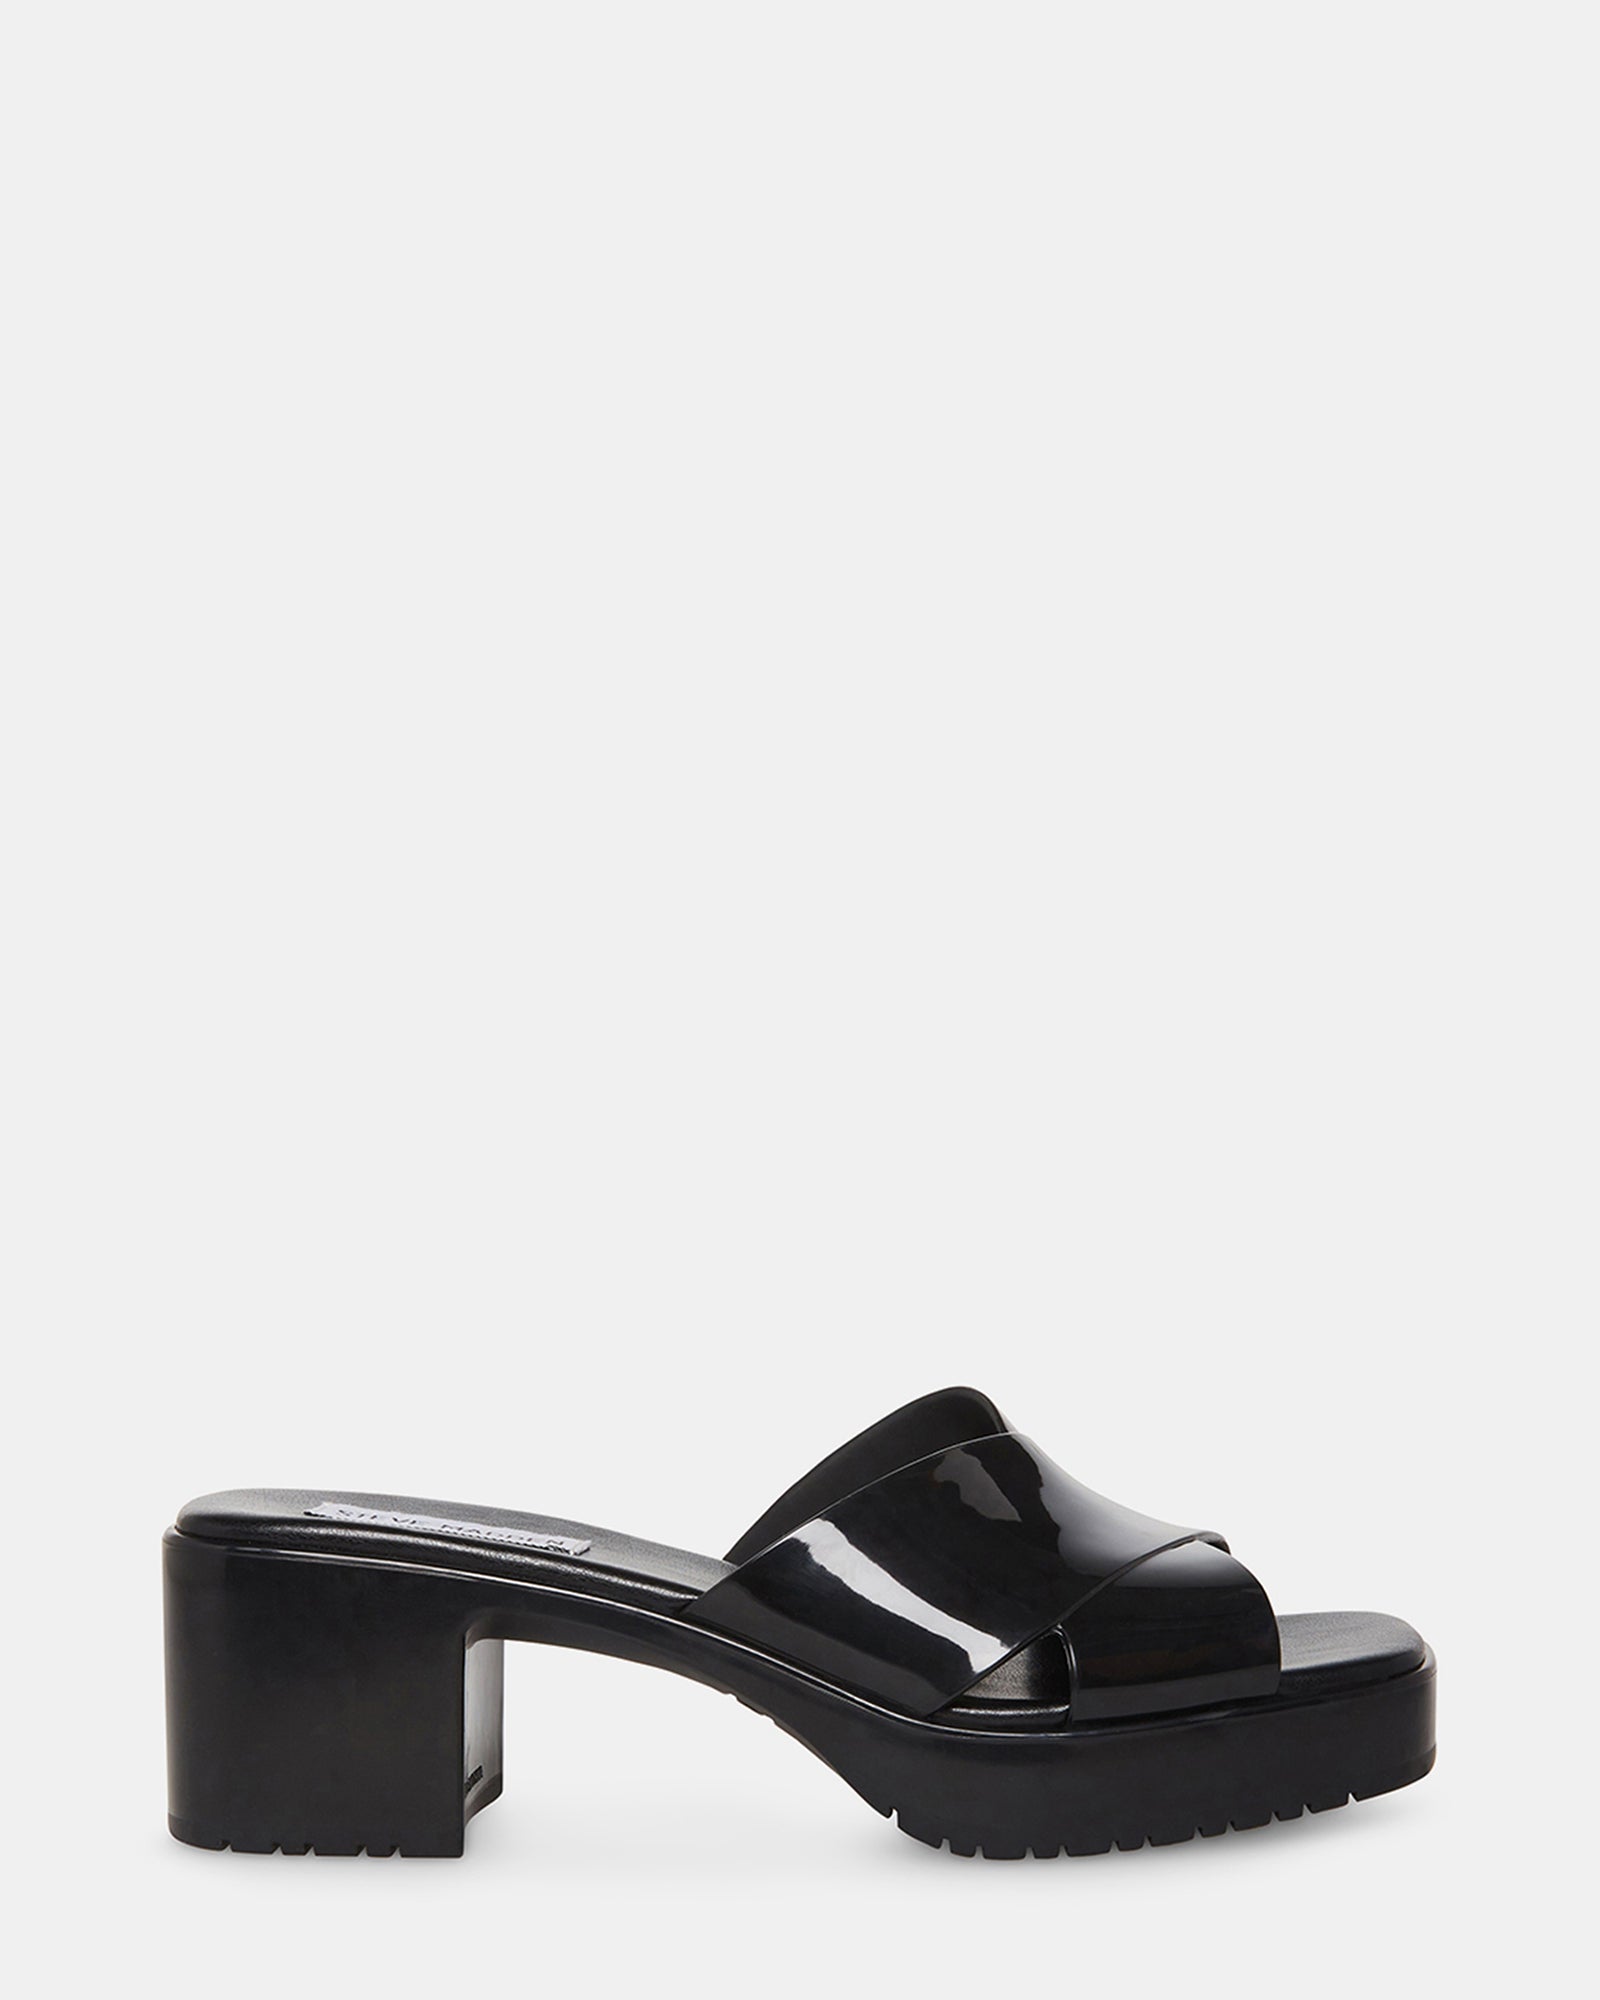 Mules – Loafers Mule Sandals, mules Madden Steve Designer Heels, | Moretrends- Women\'s Flats, &